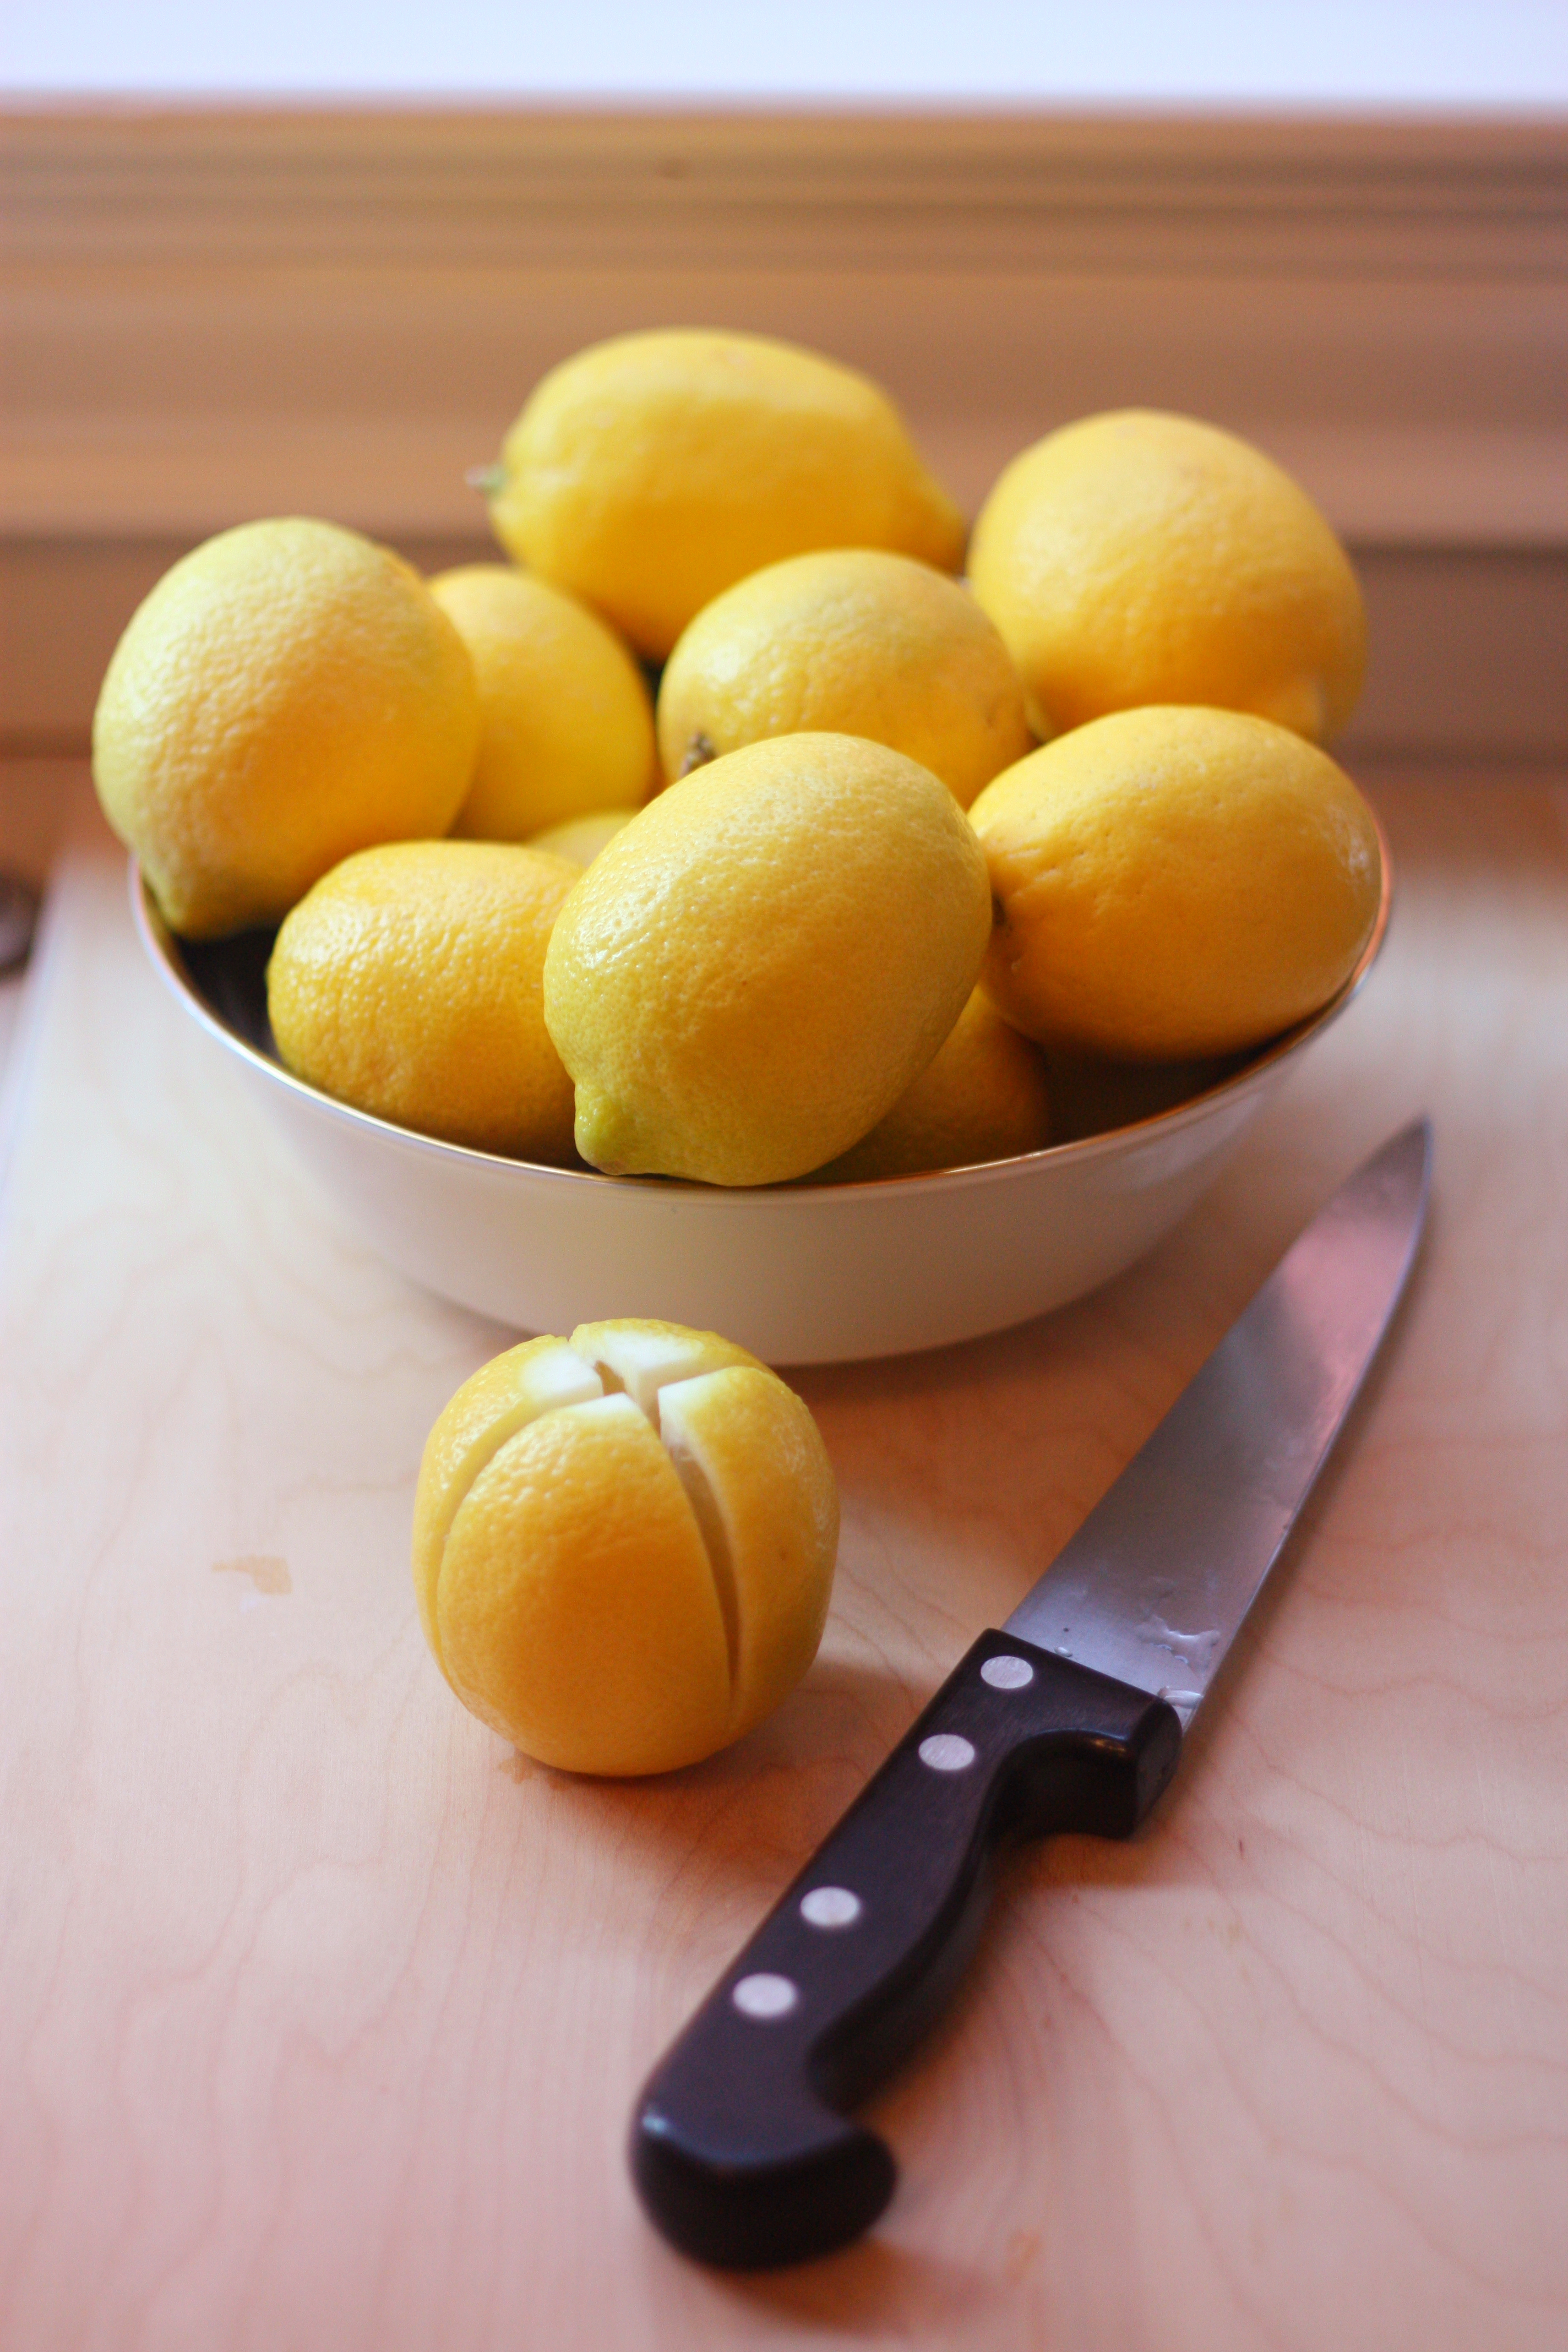 How to Make Preserved Lemons